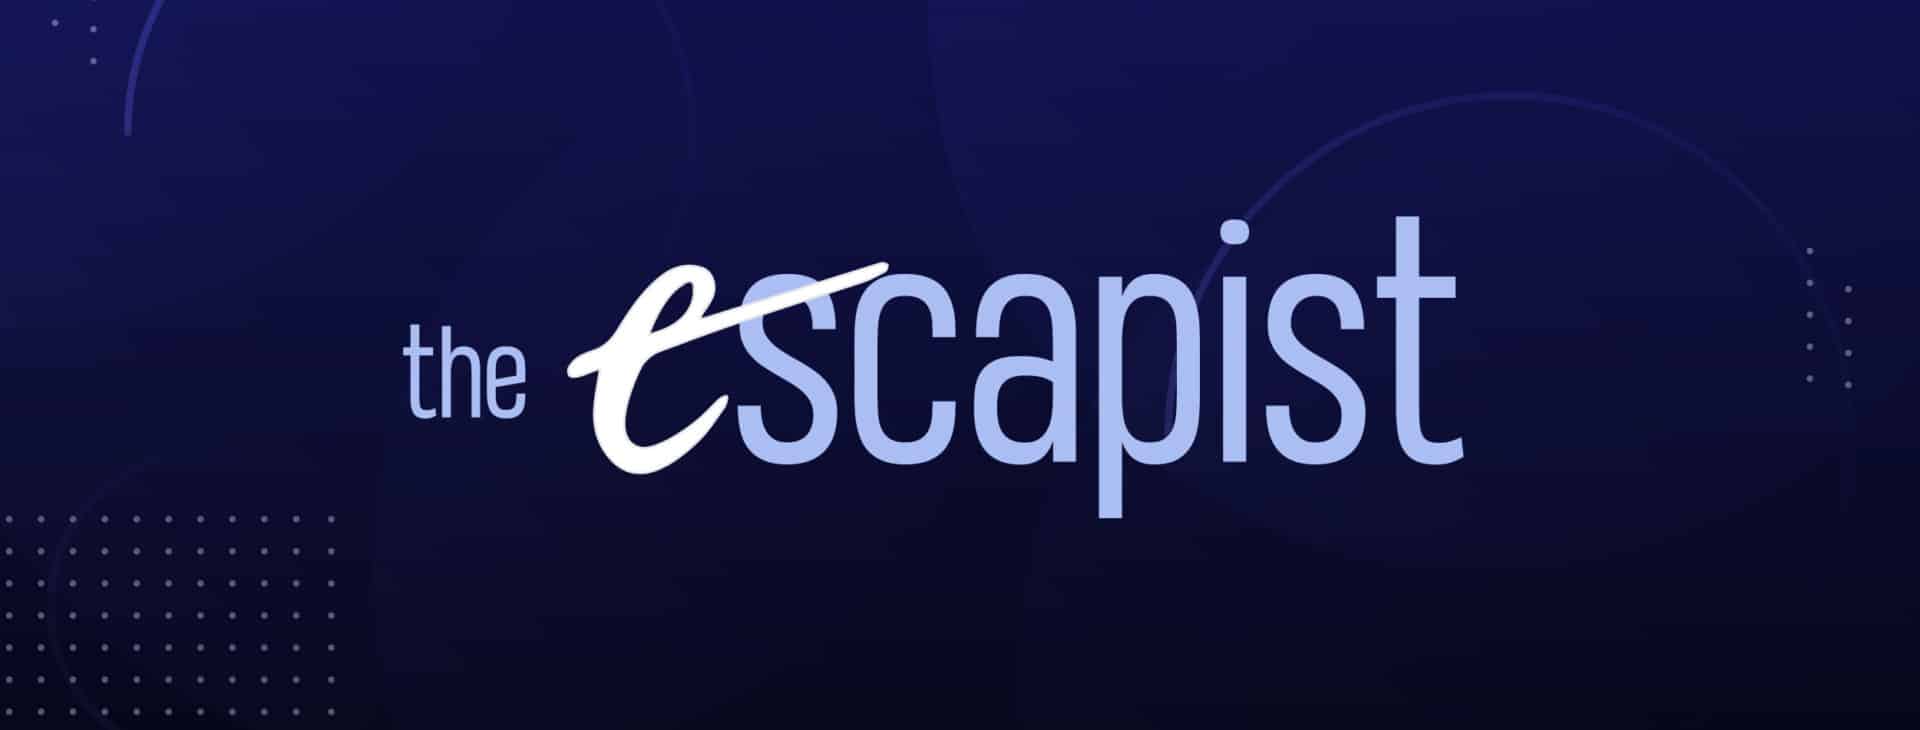 www.escapistmagazine.com